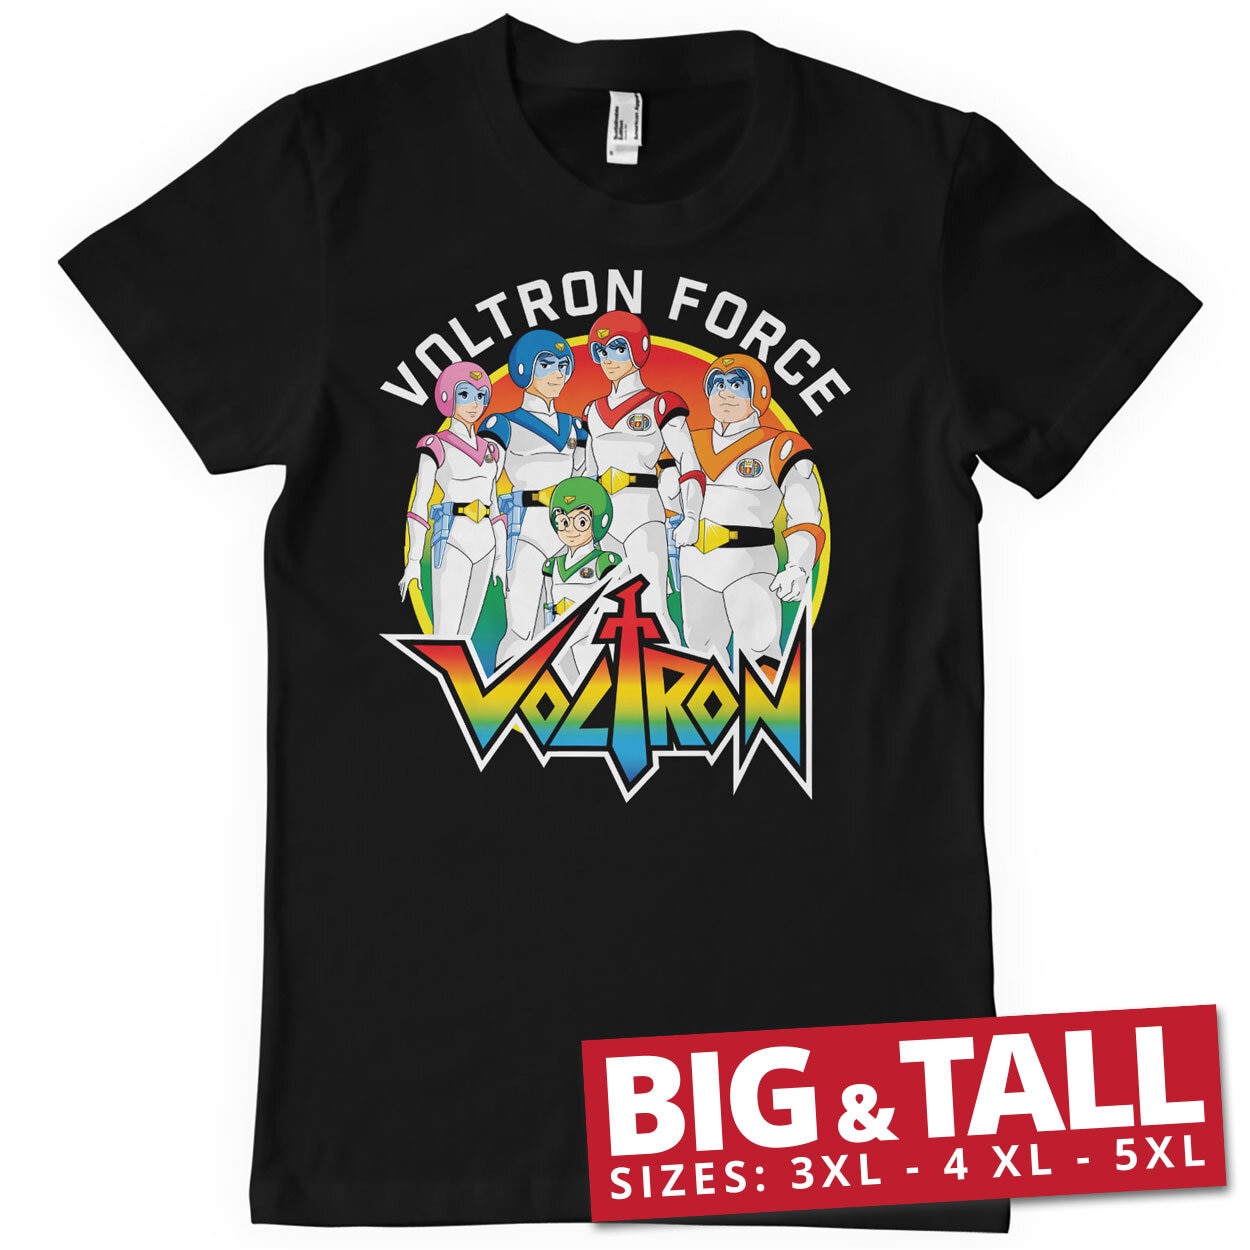 Voltron Force Big & Tall T-Shirt